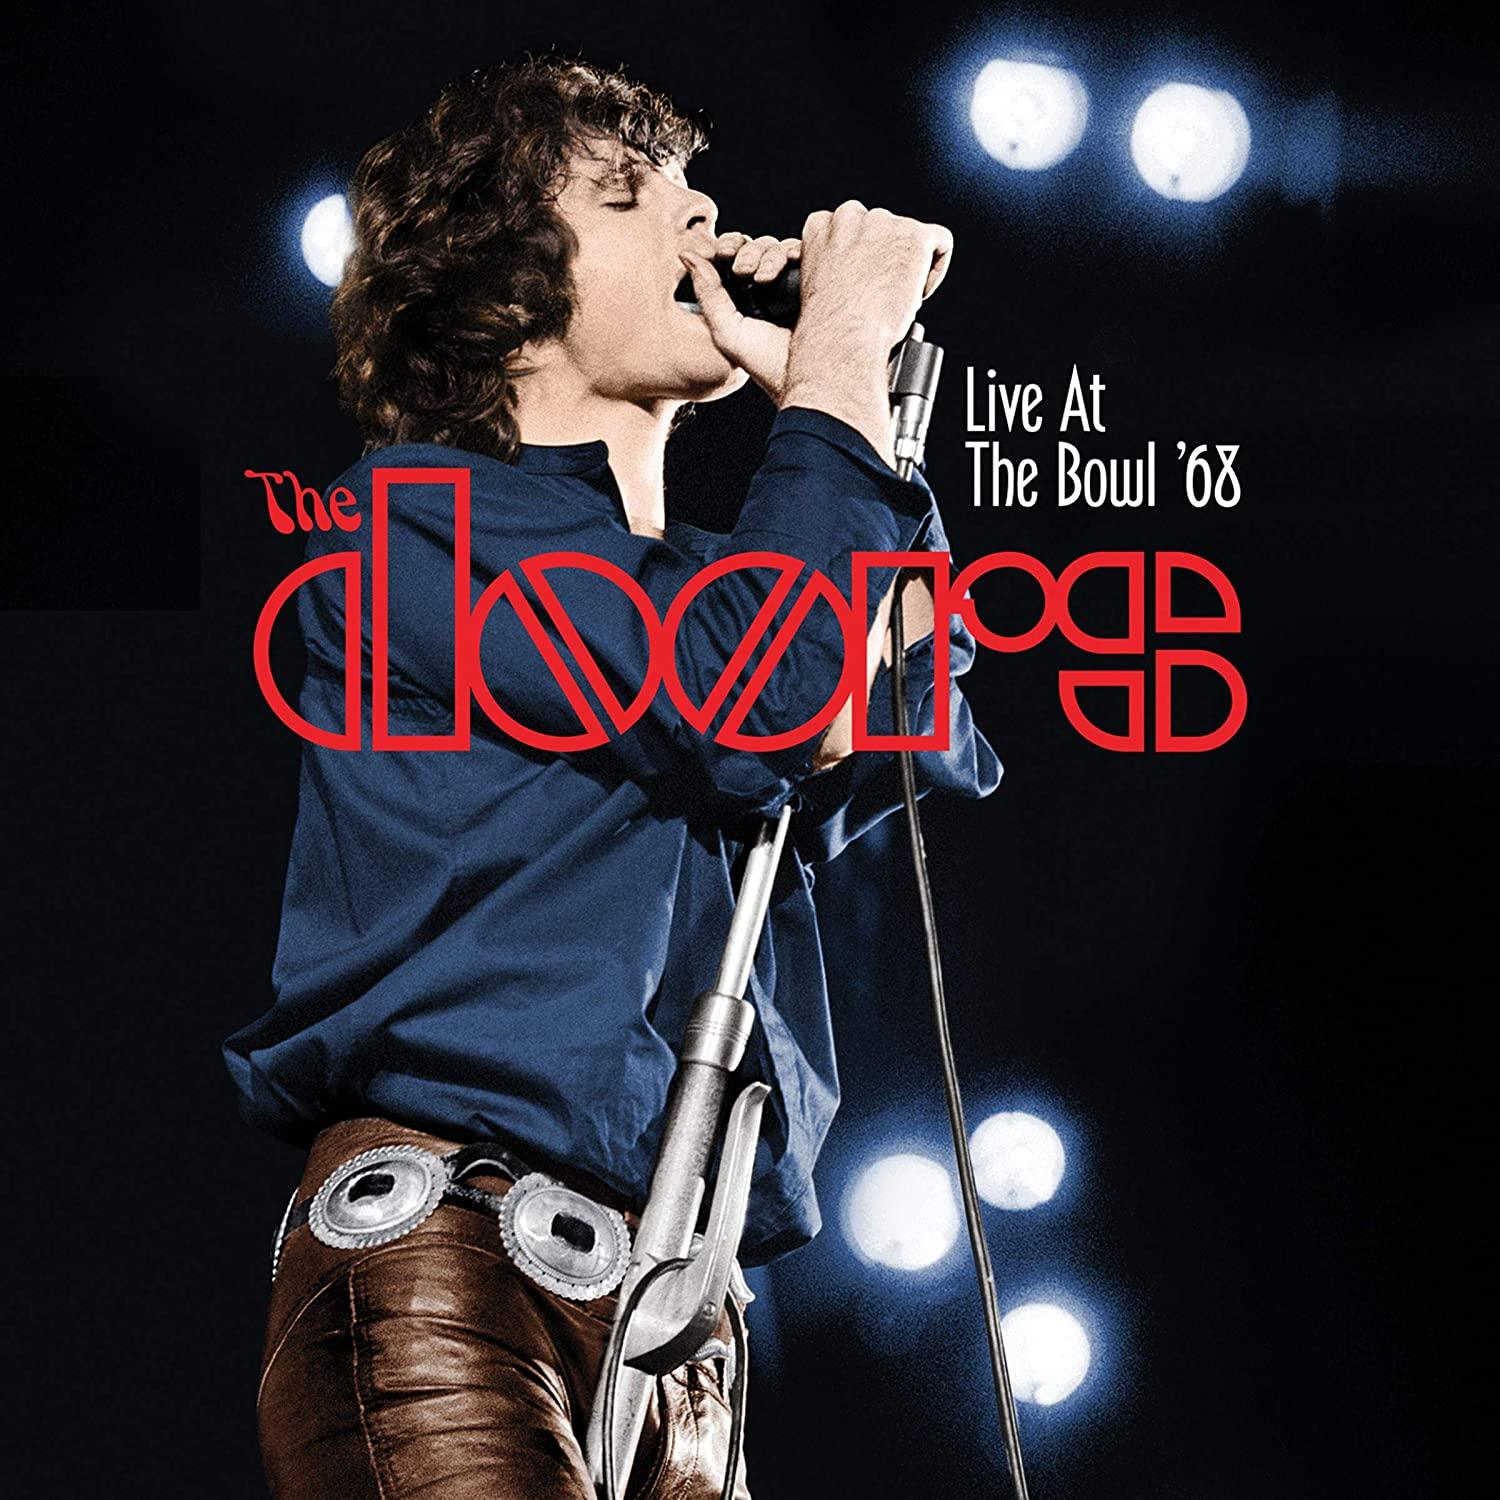 The Doors - Live At The Bowl 68 - Joco Records